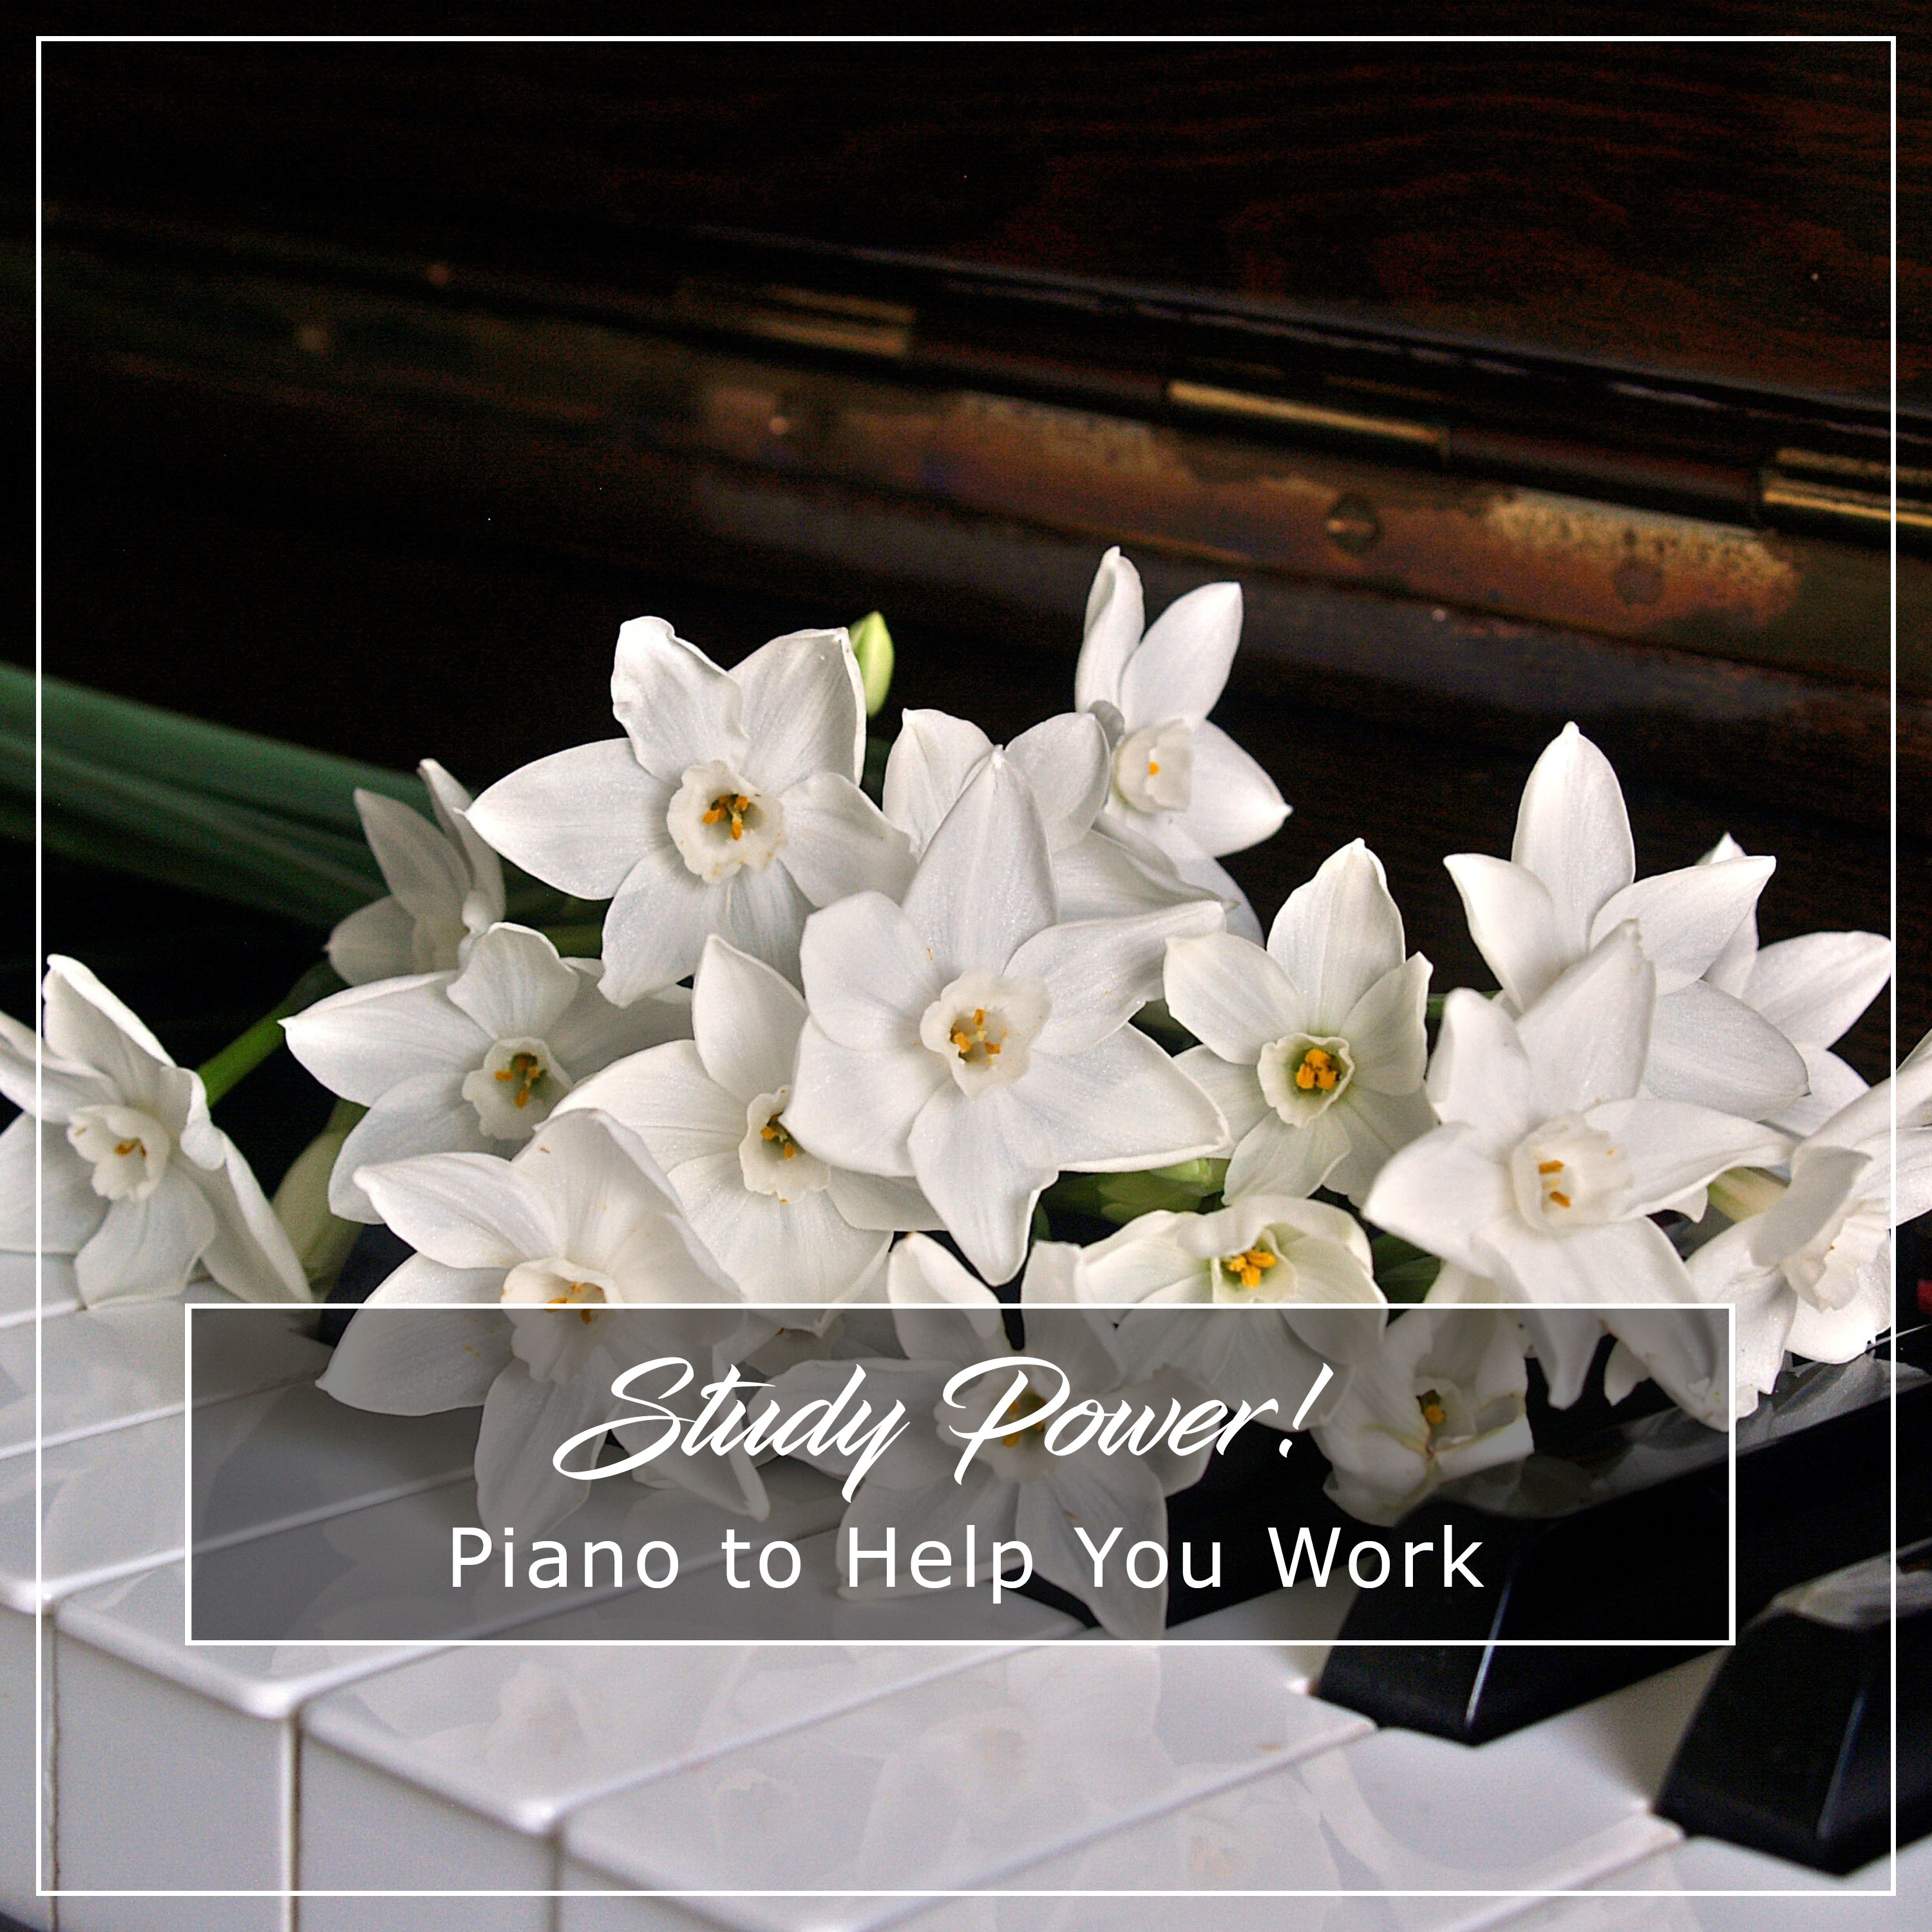 #Study Power! Amazing Piano to Help You Work